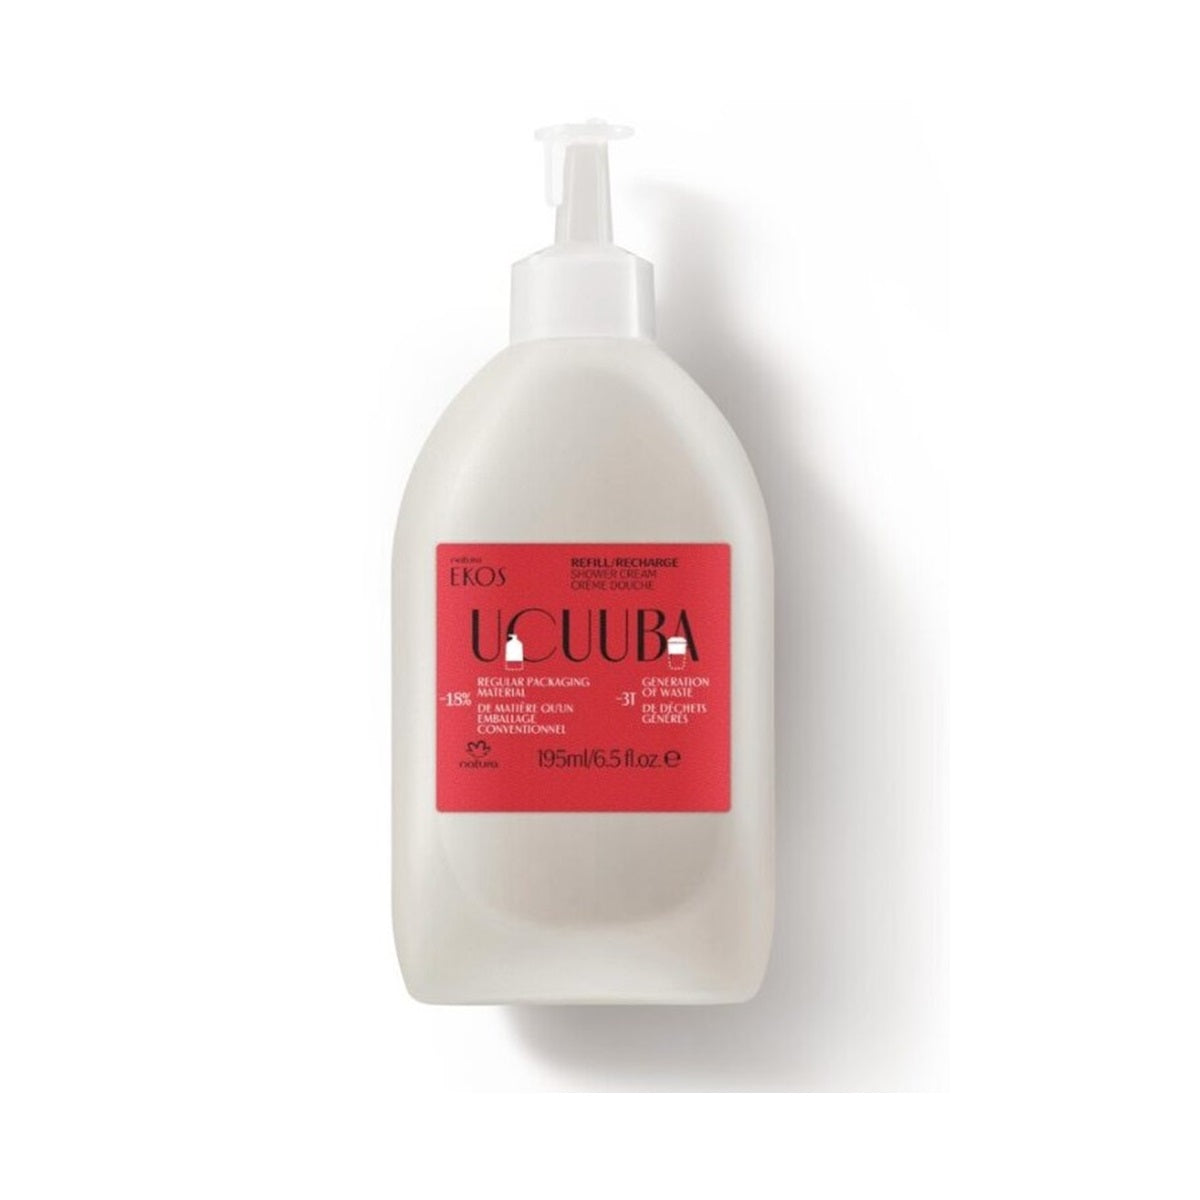 Ucuuba Creamy Shower Gel Refill 195ml